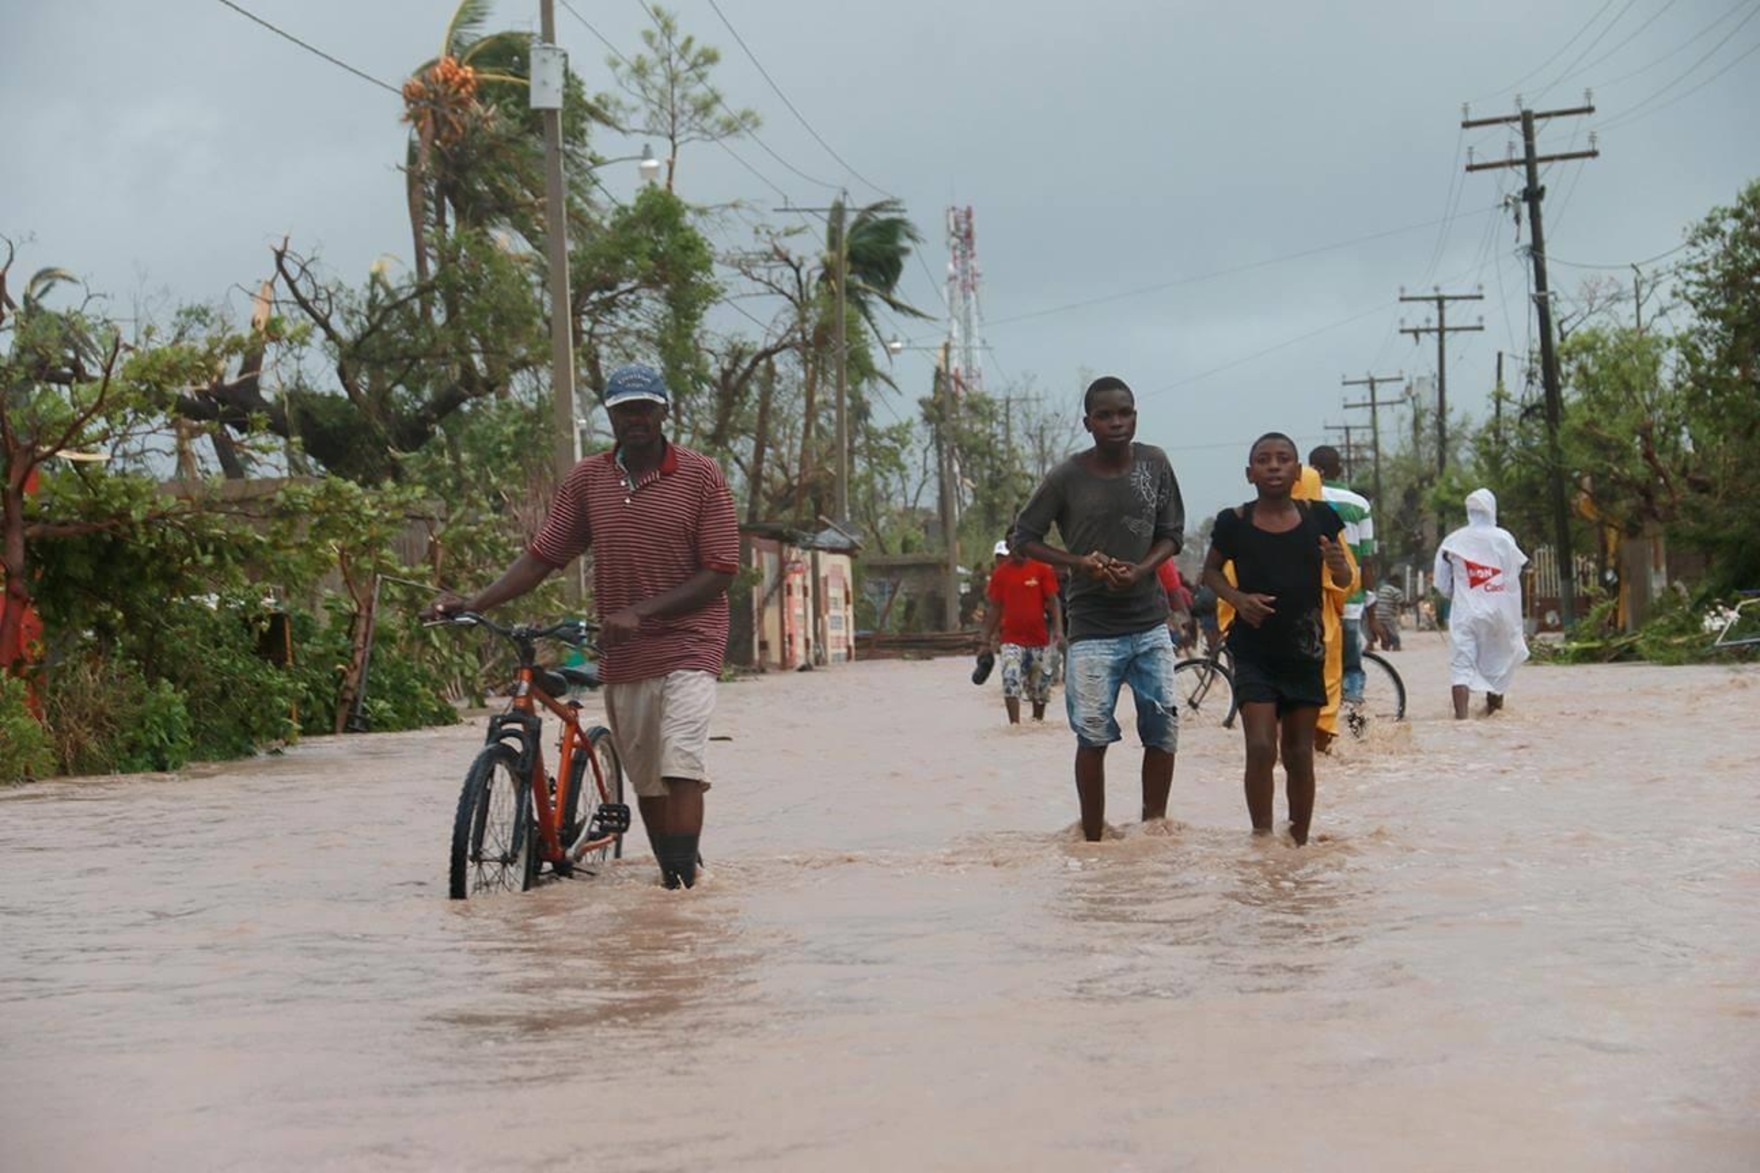 £50,000 donation to Red Cross following devastation of Hurricane Matthew